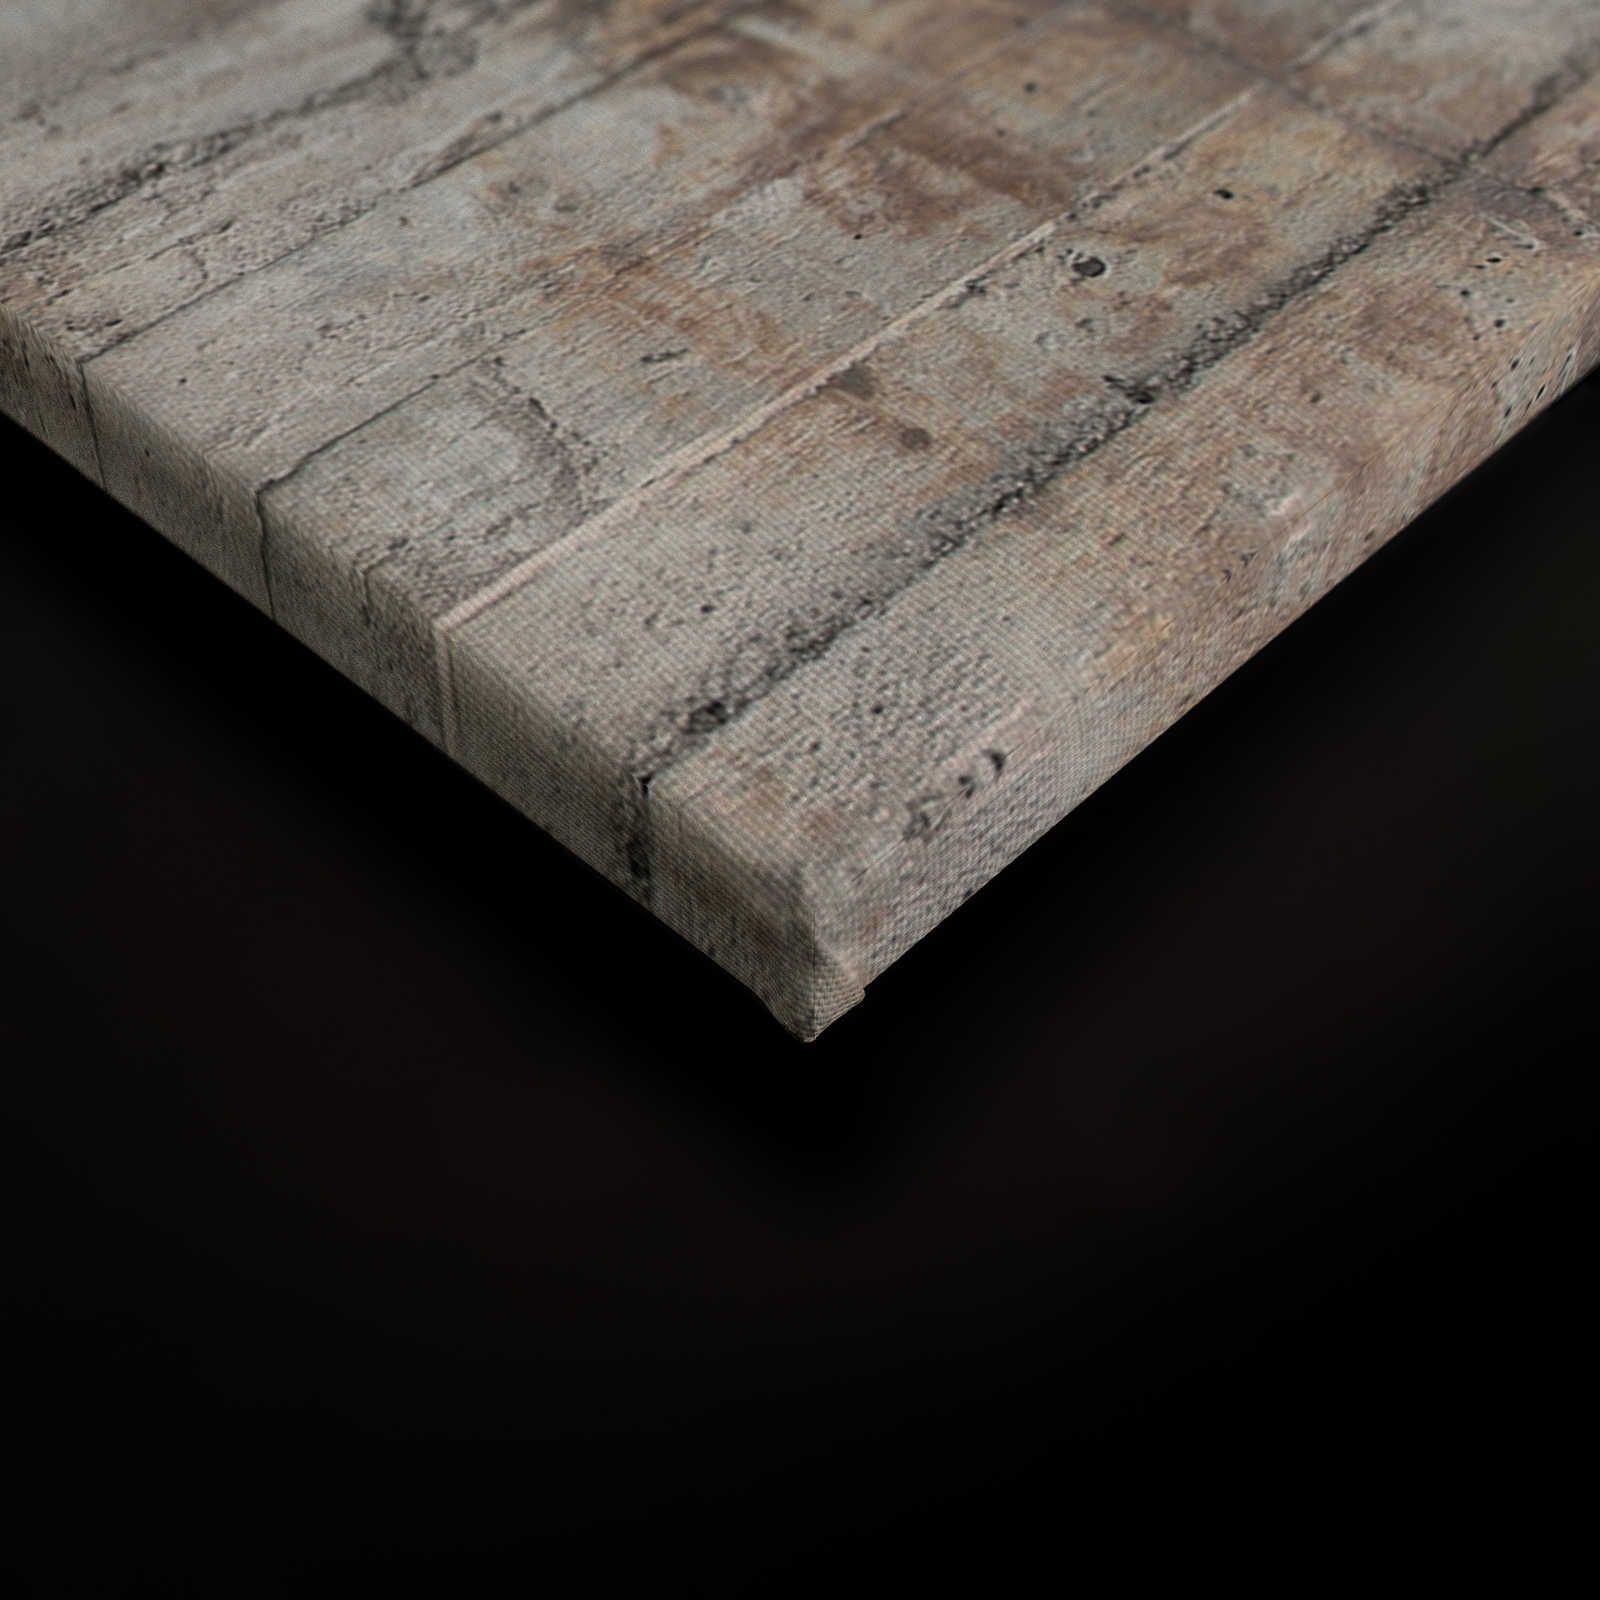             Beton Leinwandbild rustikaler Stahlbeton Grau Braun – 1,20 m x 0,80 m
        